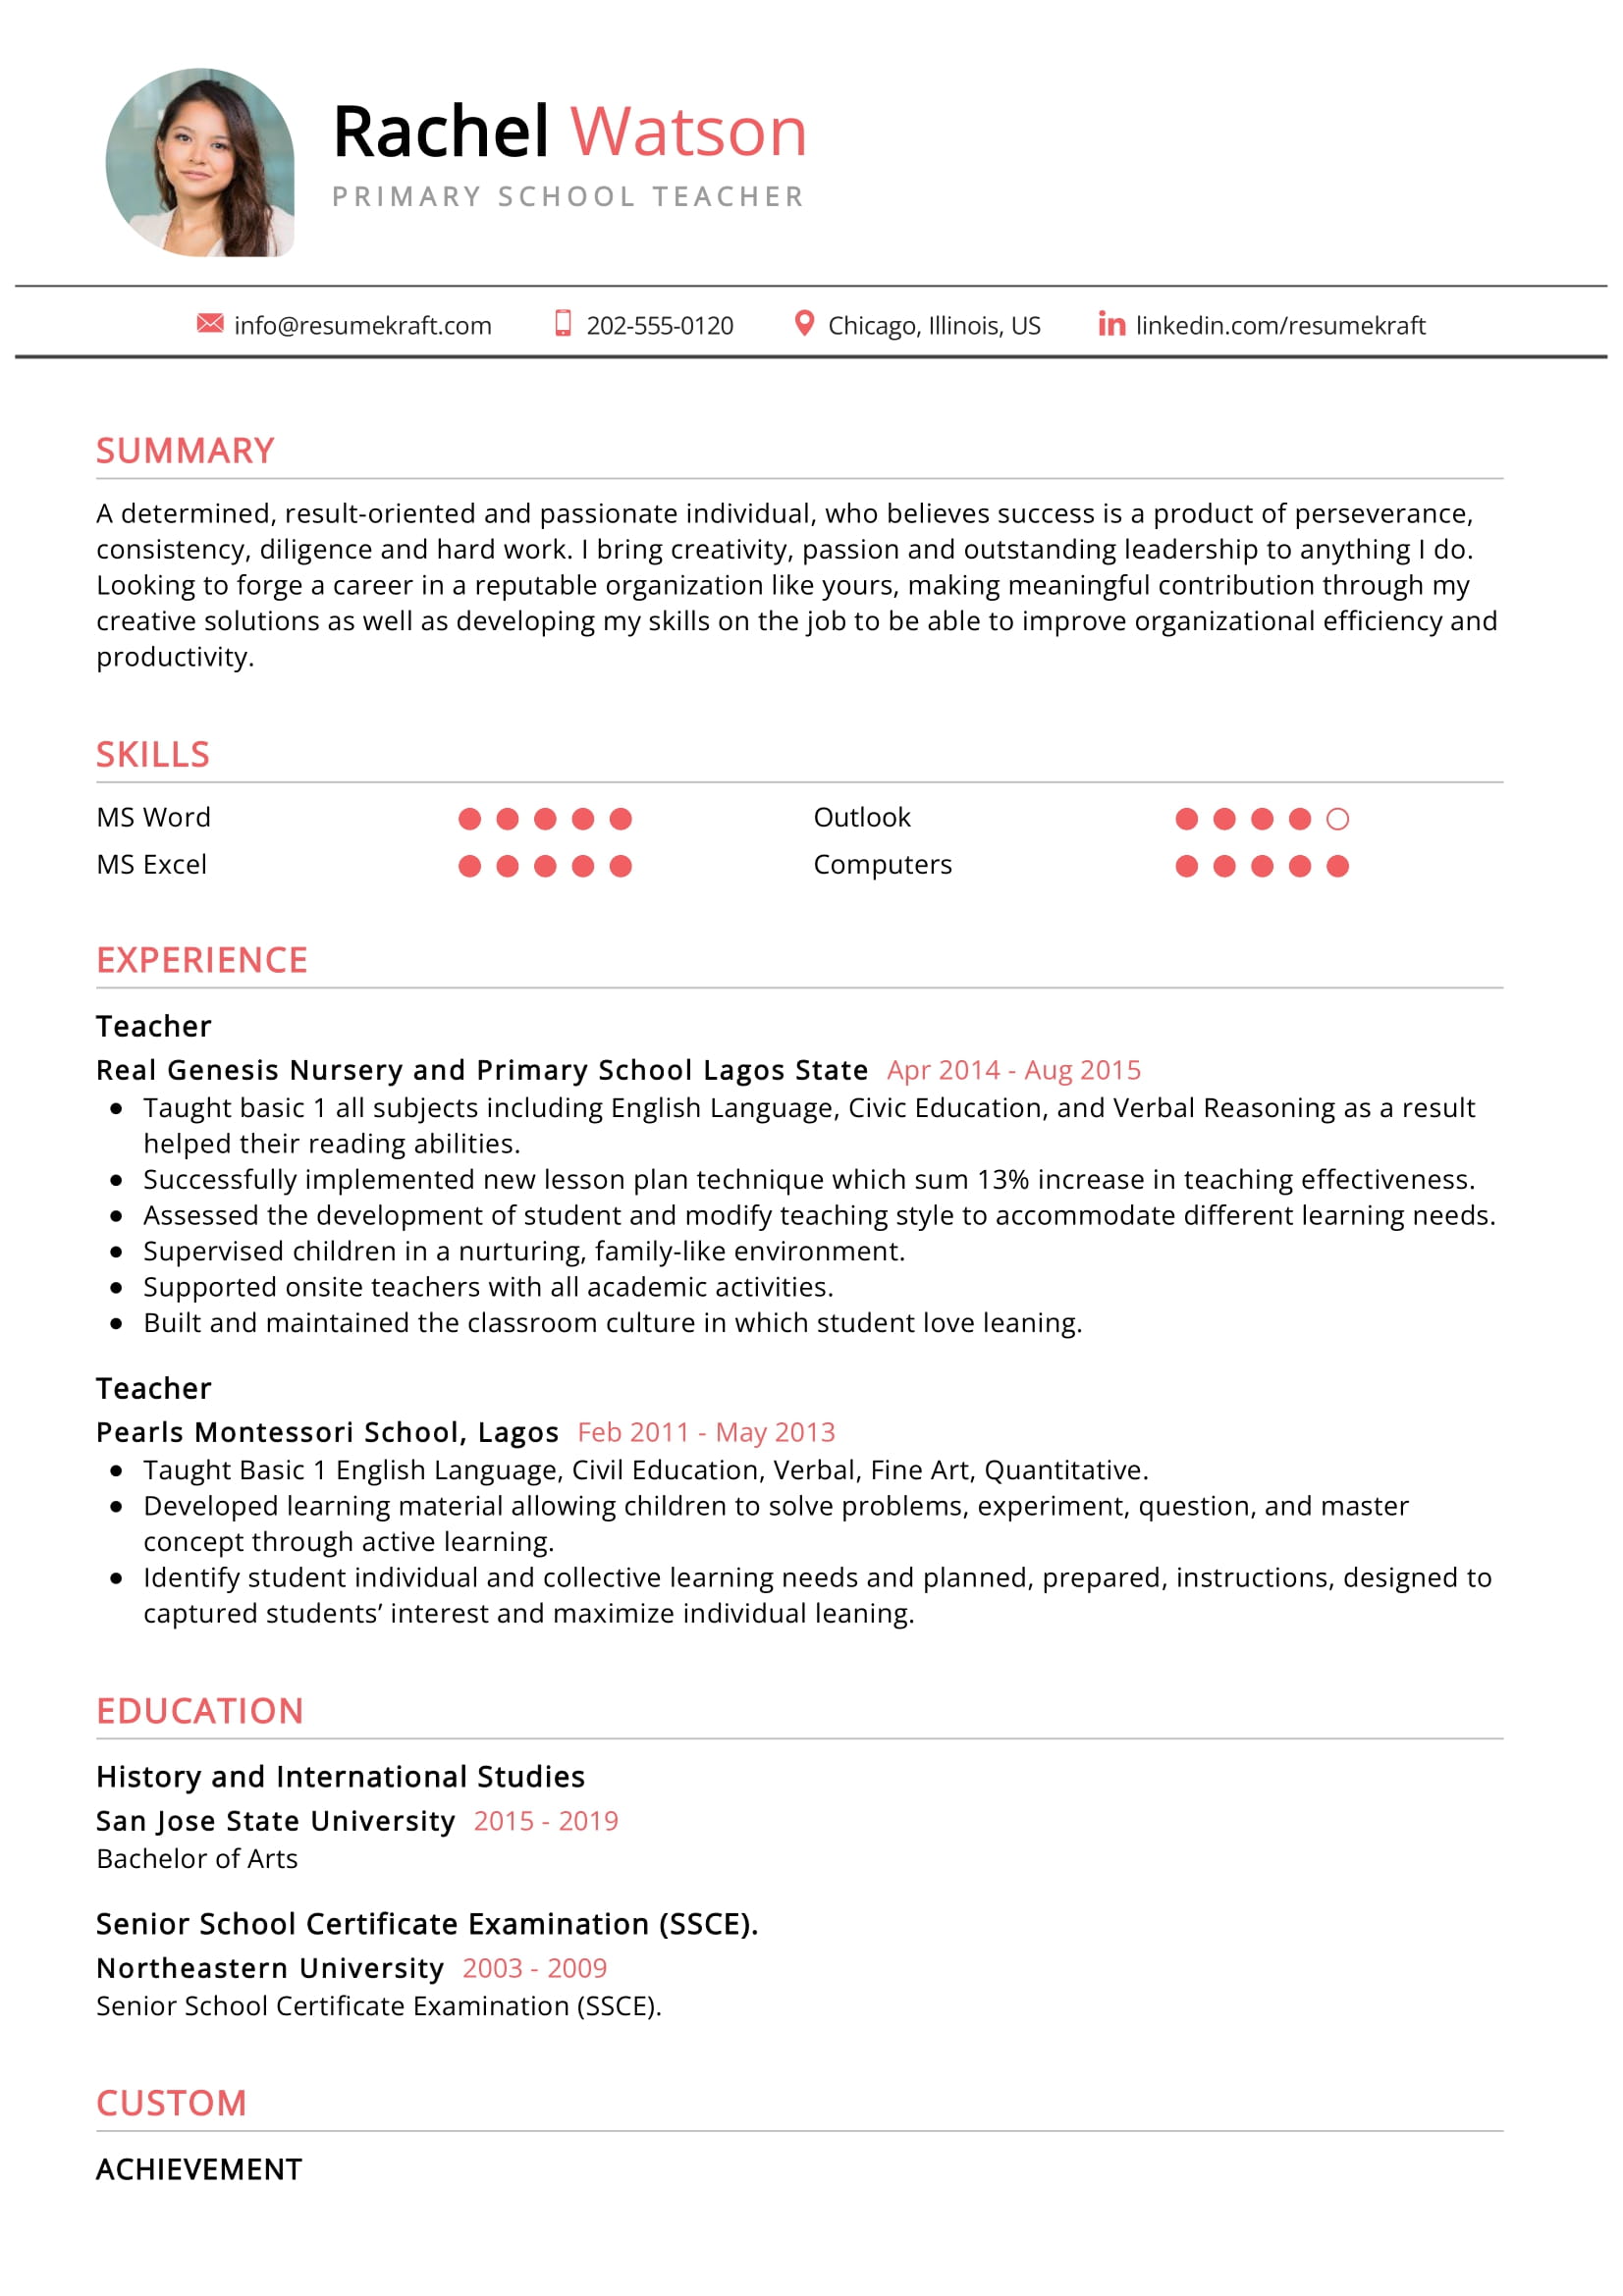 resume for primary school teacher experience